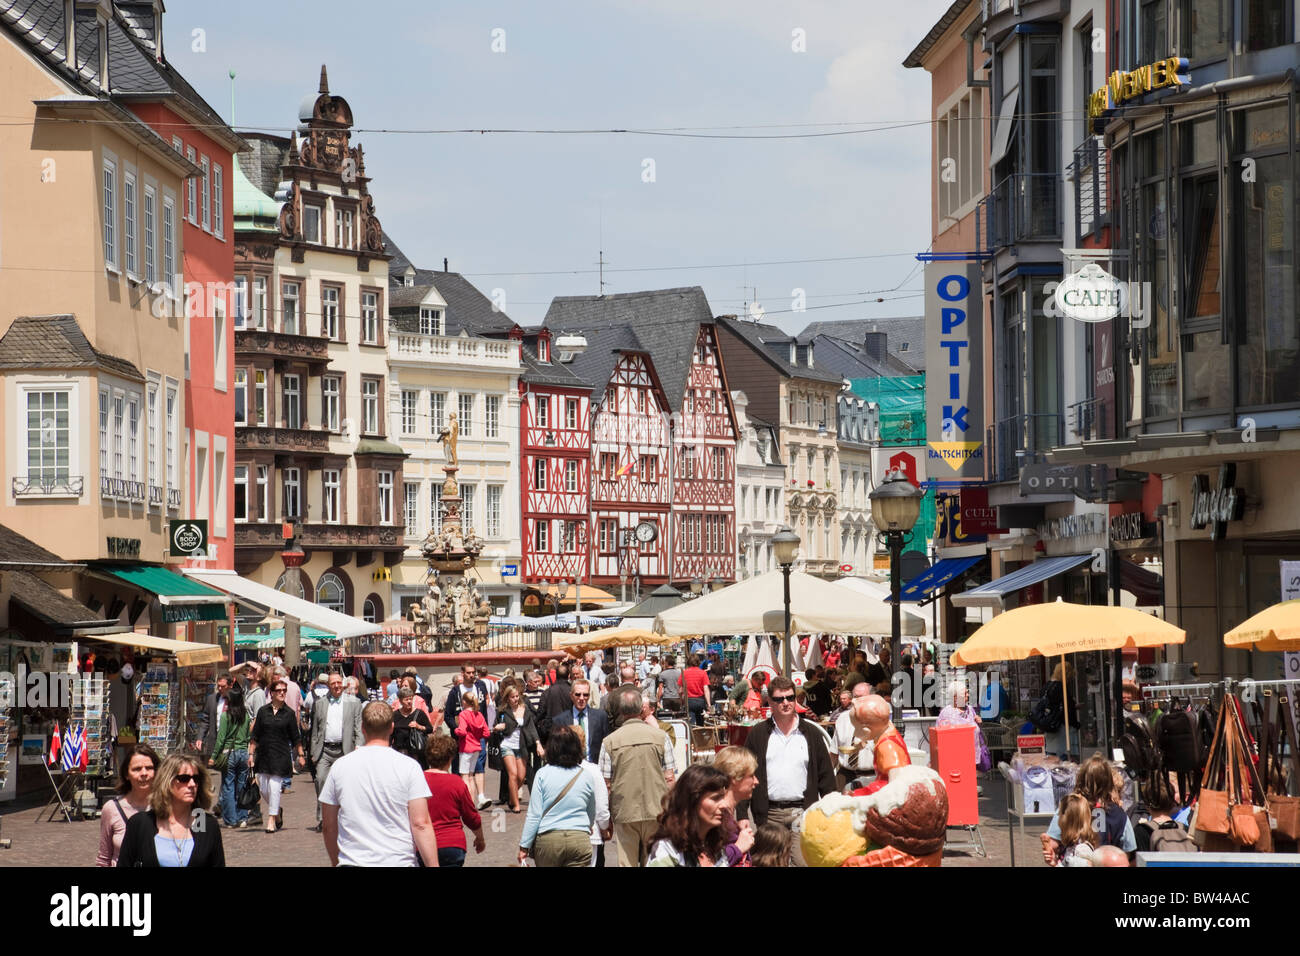 Busy pedestrian street scene in oldest German city. Trier, Rhineland-Palatinate, Germany, Europe. Stock Photo